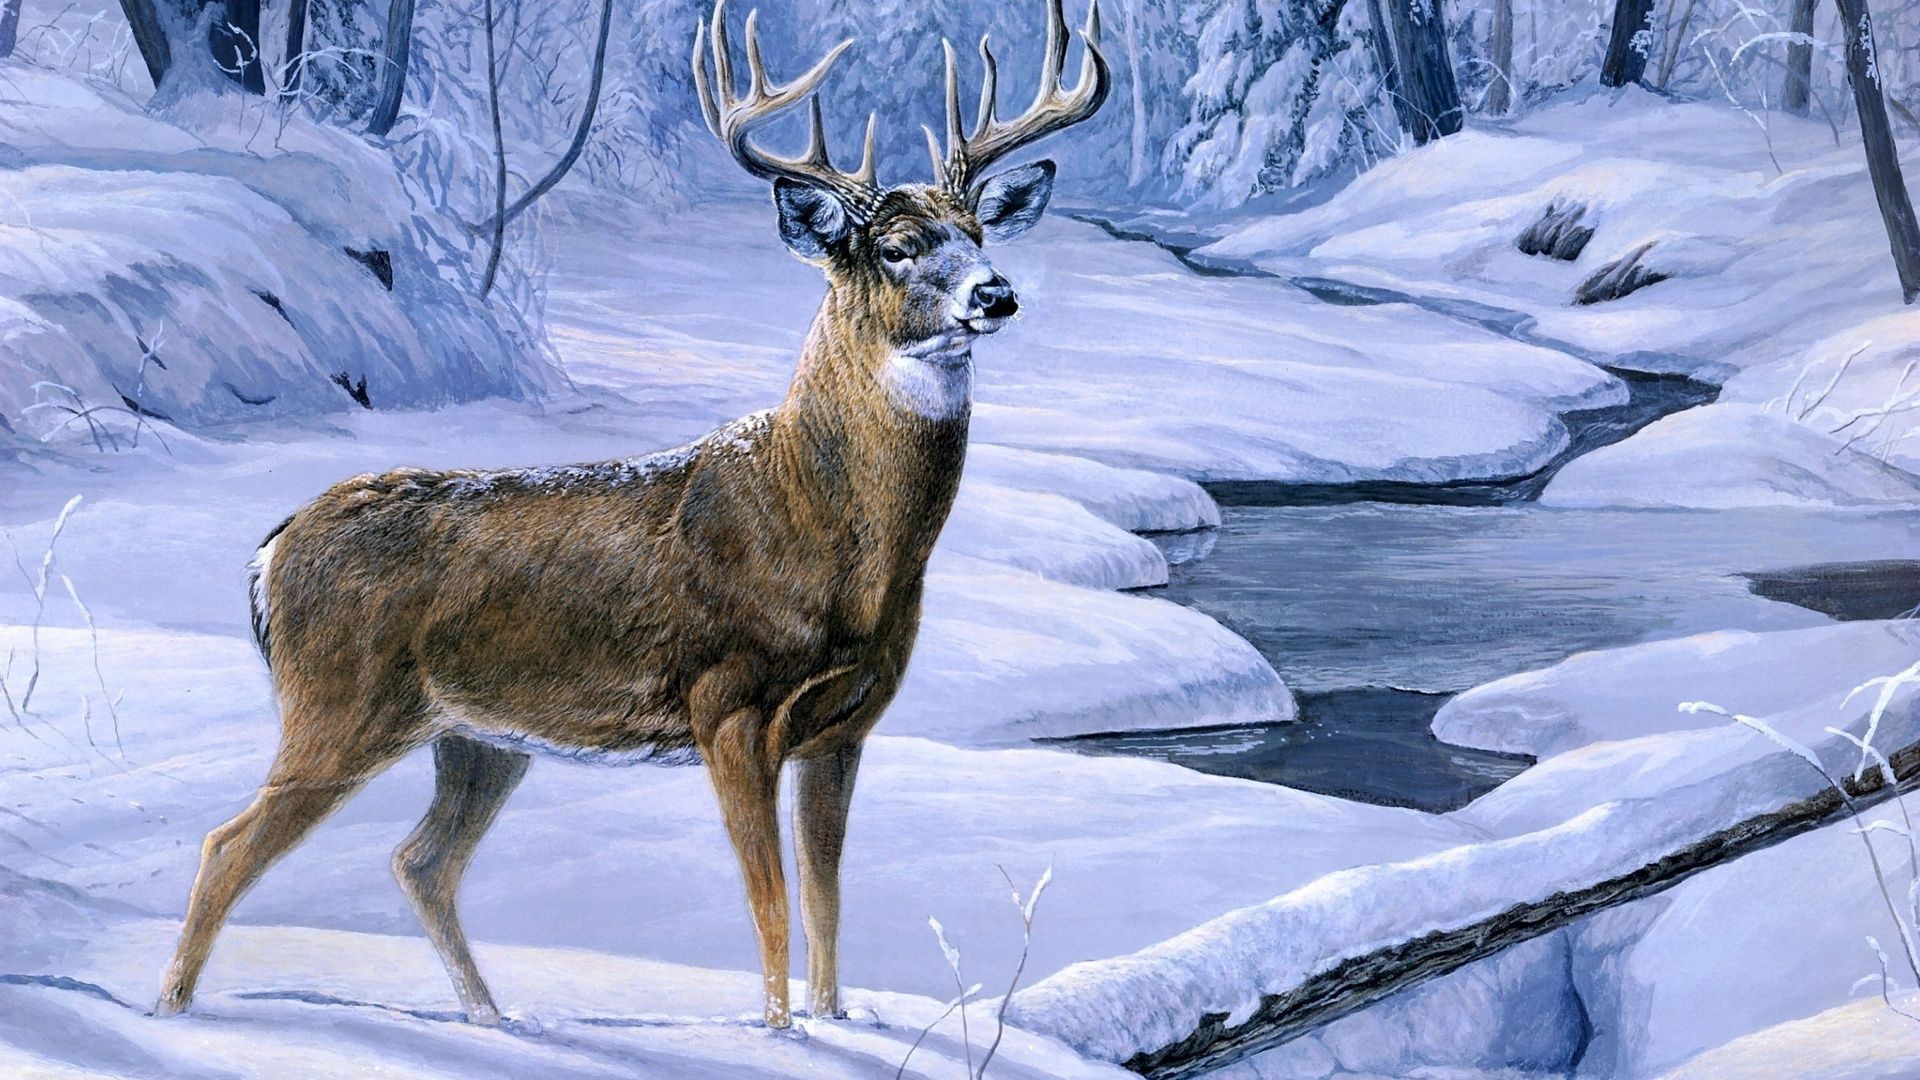 Hd Deer Hunting Wallpaper. Deer wallpaper, Hunting wallpaper, Deer picture